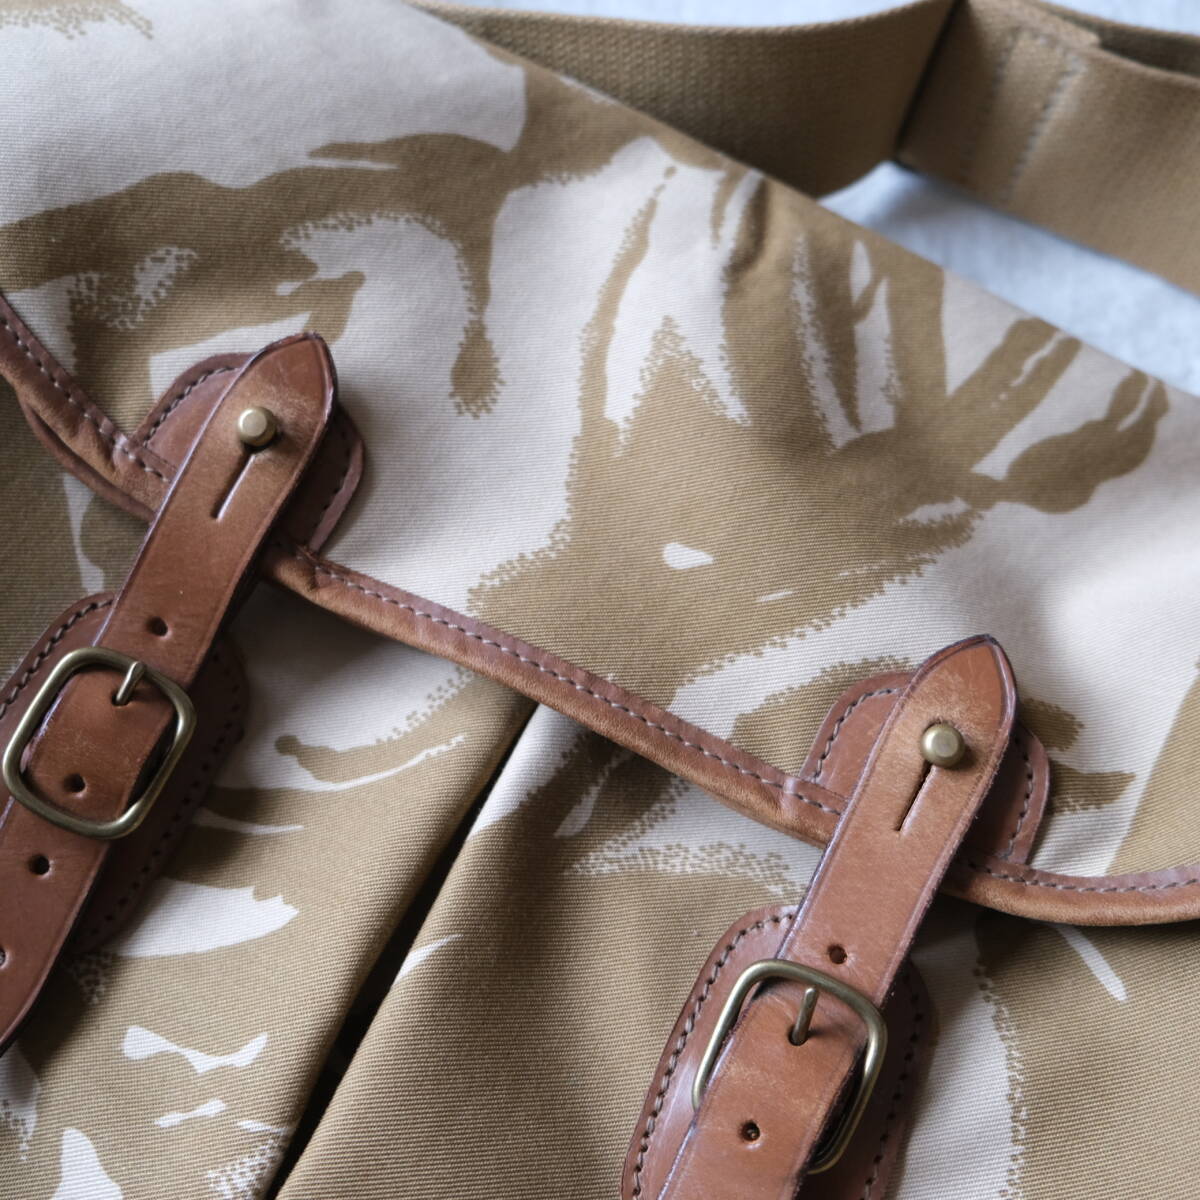  rare color [ BRADY ] blur tiARIEL TROUT BAG CAMO Ariel trout bag / camouflage camouflage pattern / shoulder England Britain made 